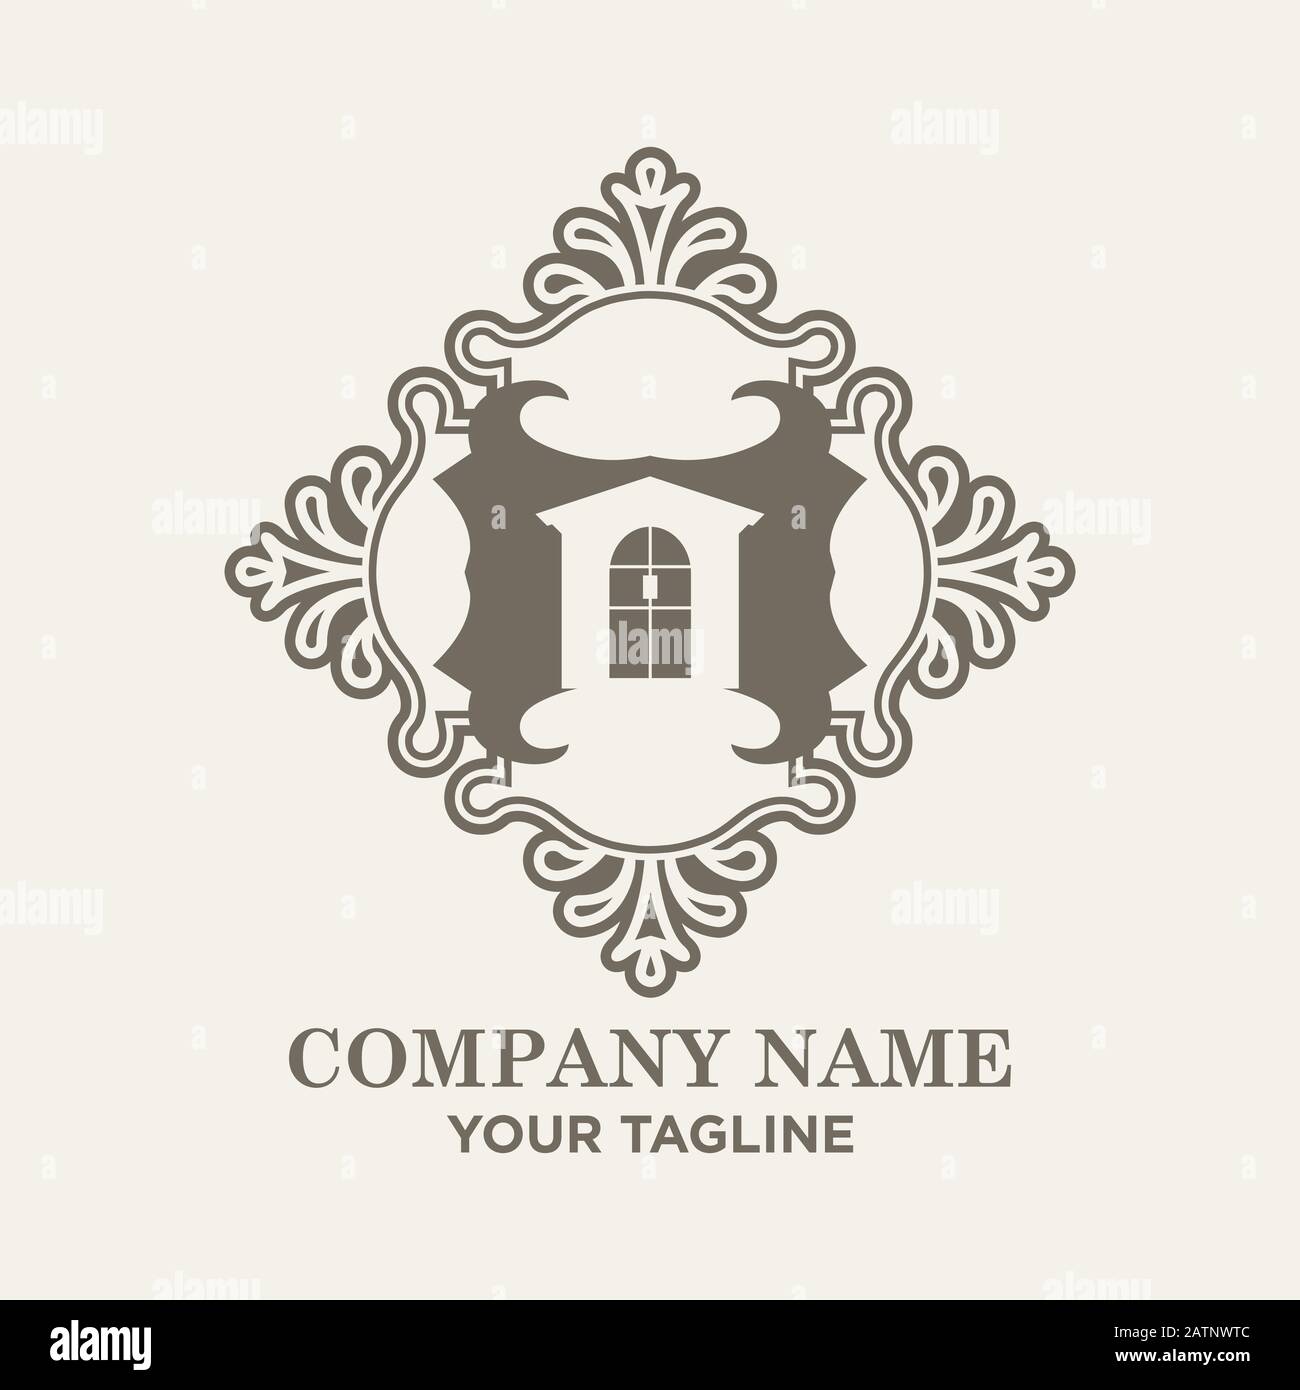 invest or landscape design business. Real estate forest logo. Country house vector vintage symbol Stock Vector